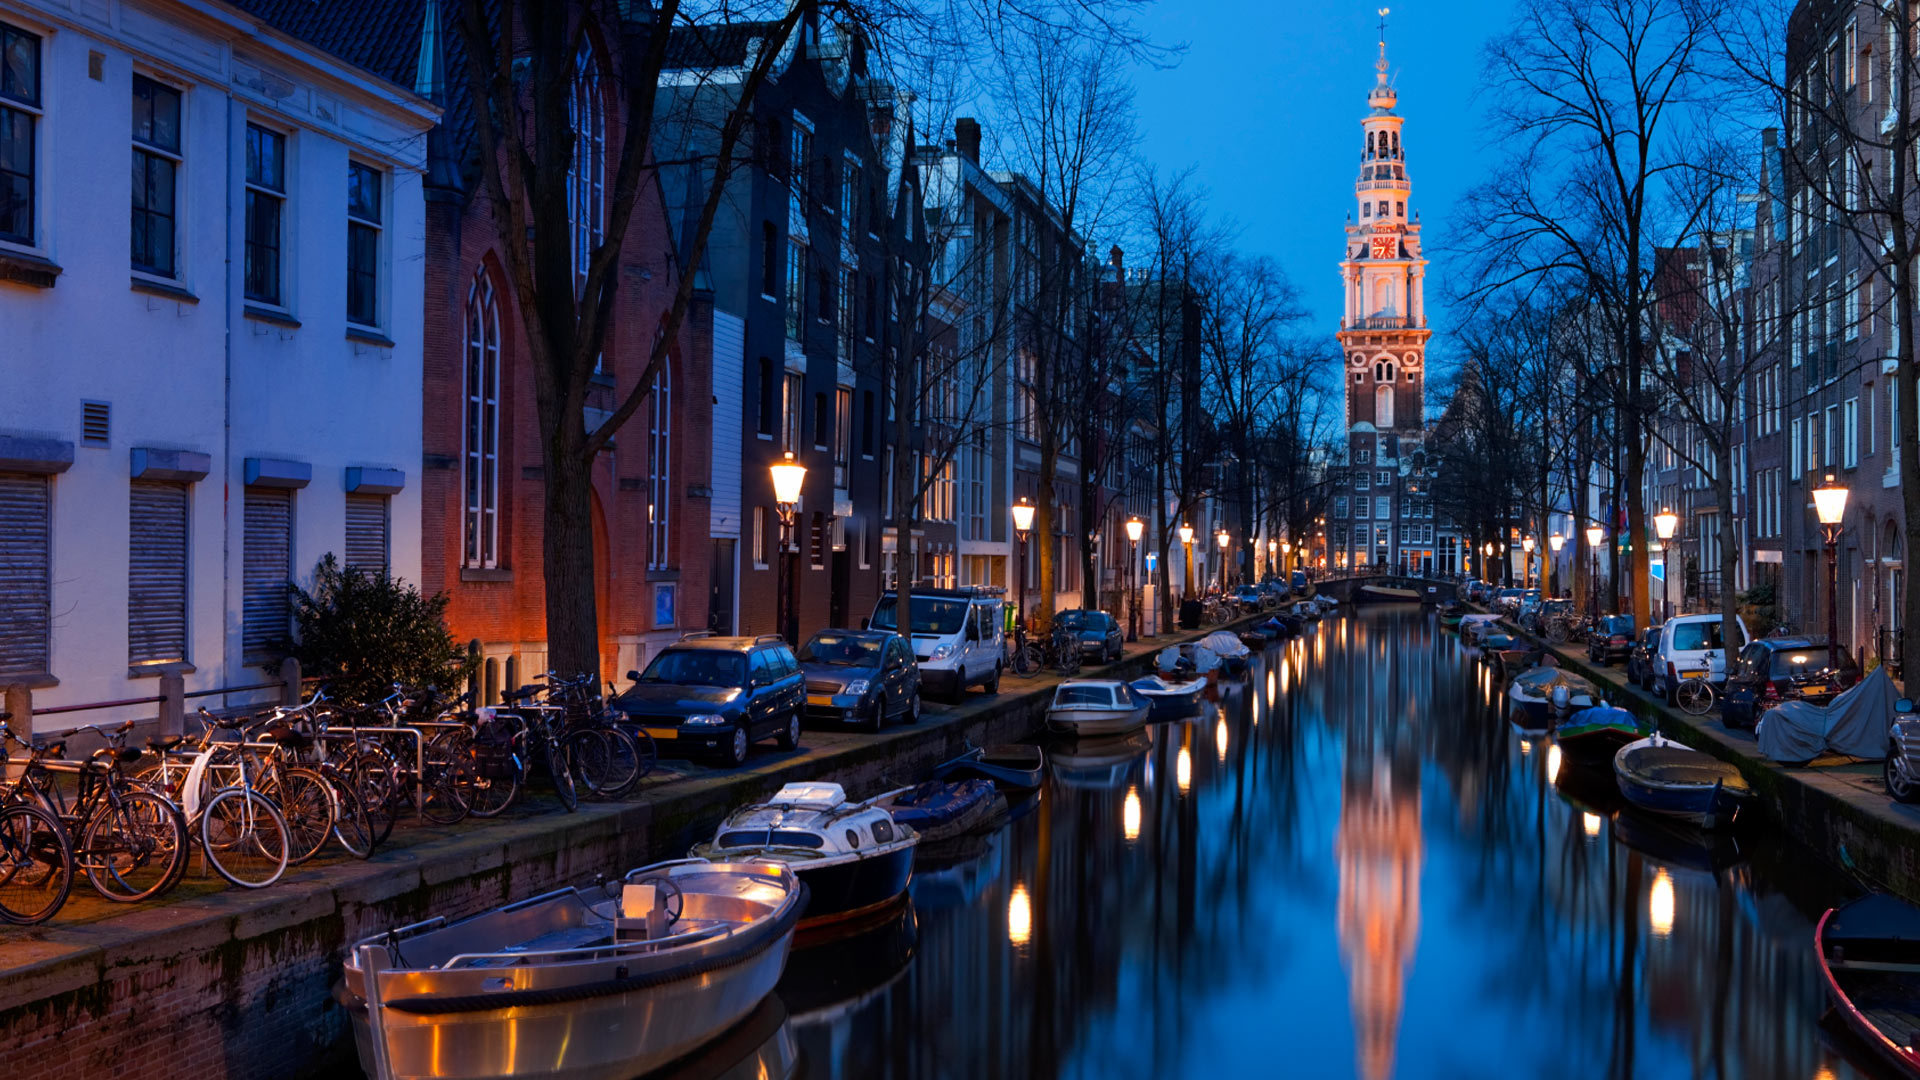 netherlands, man made, reflection, amsterdam, canal, church, night, cities